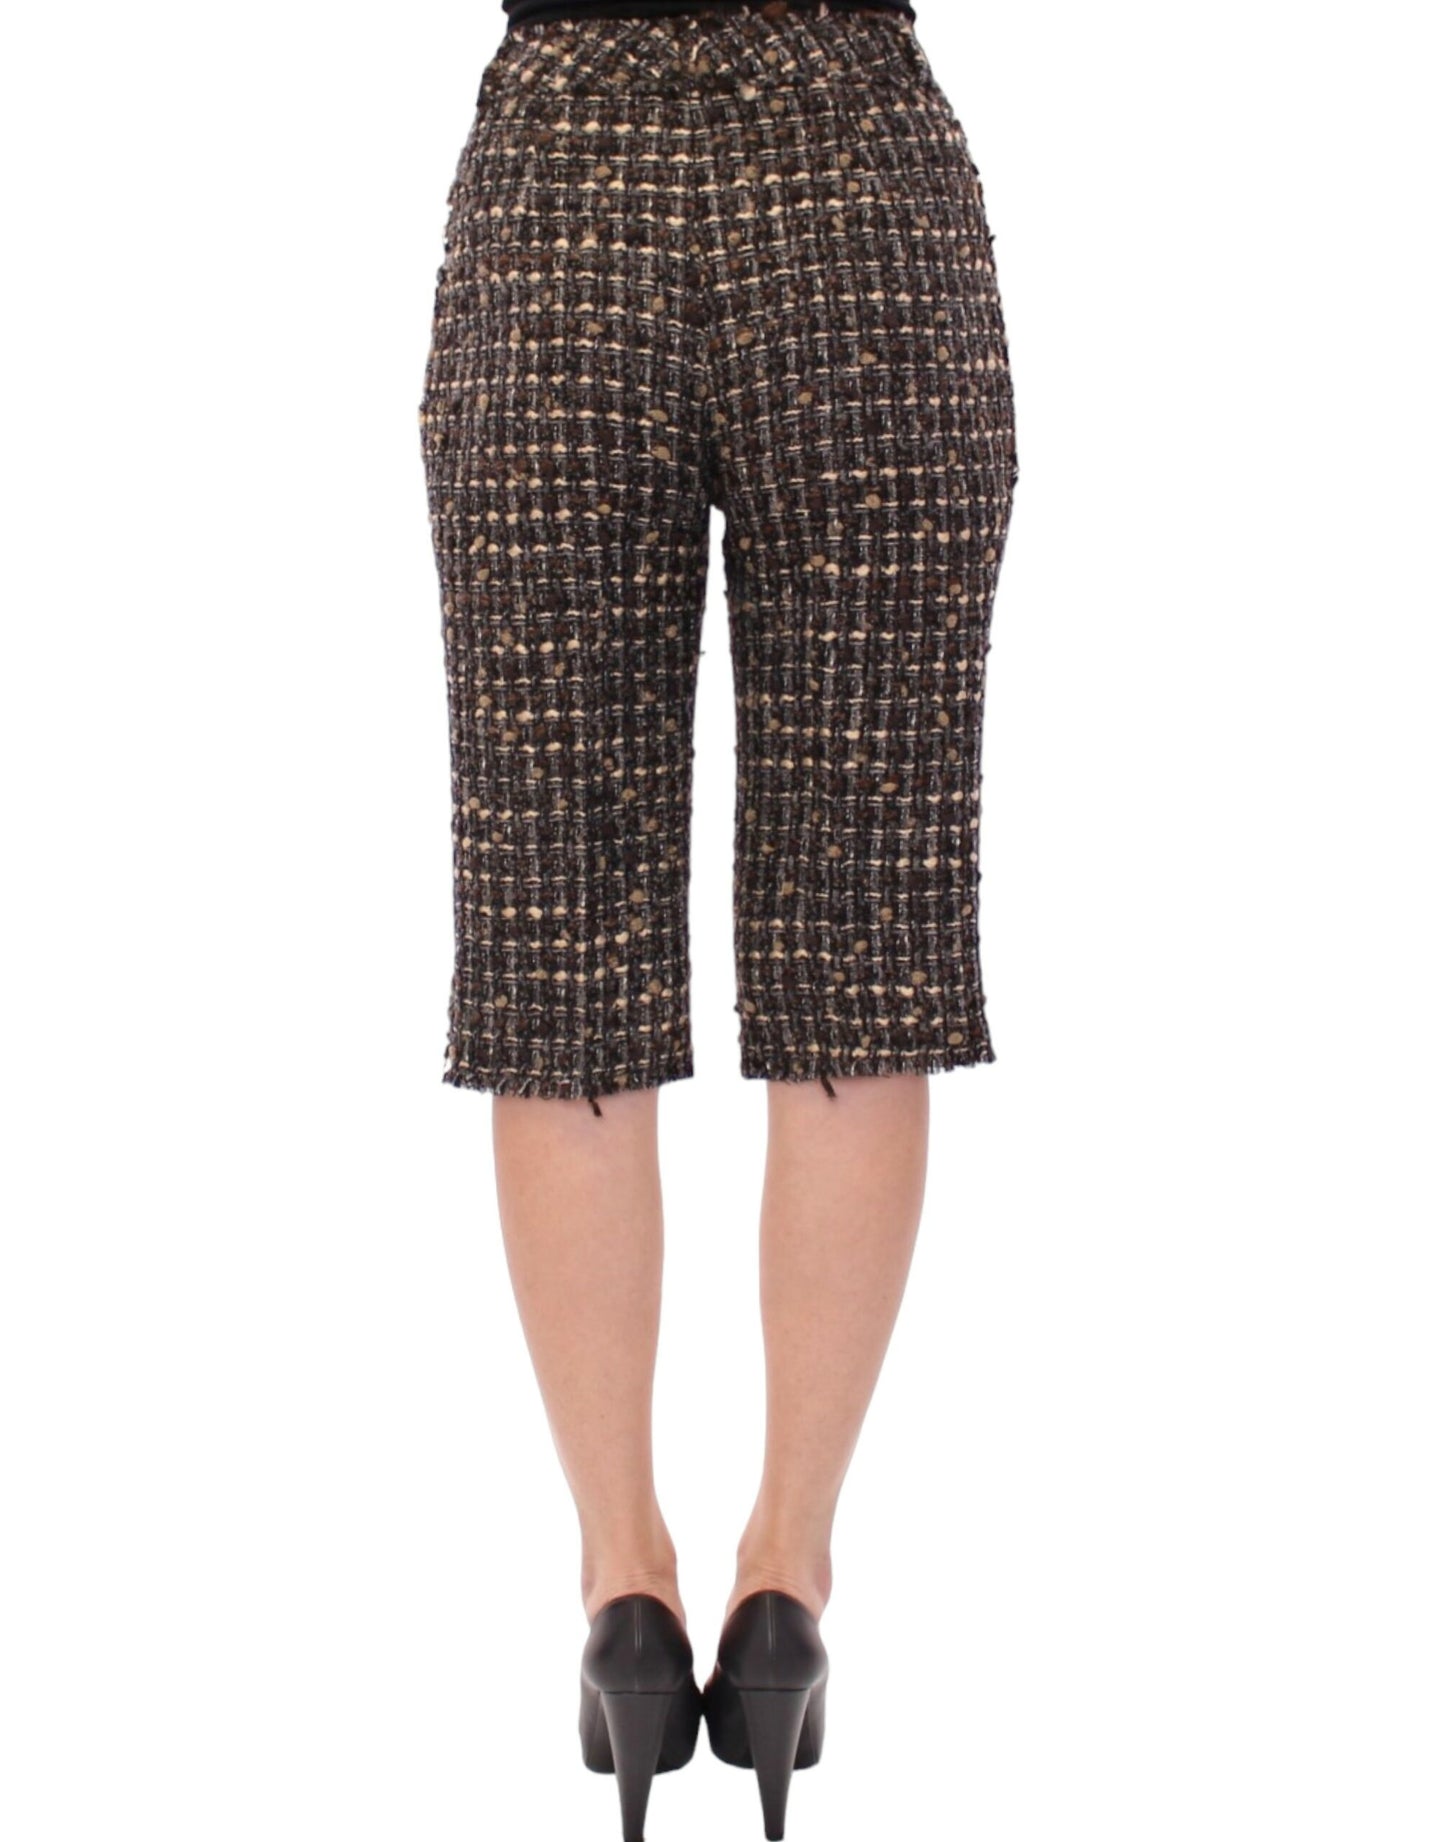 Dolce & Gabbana Multicolor Wool Shorts Pants